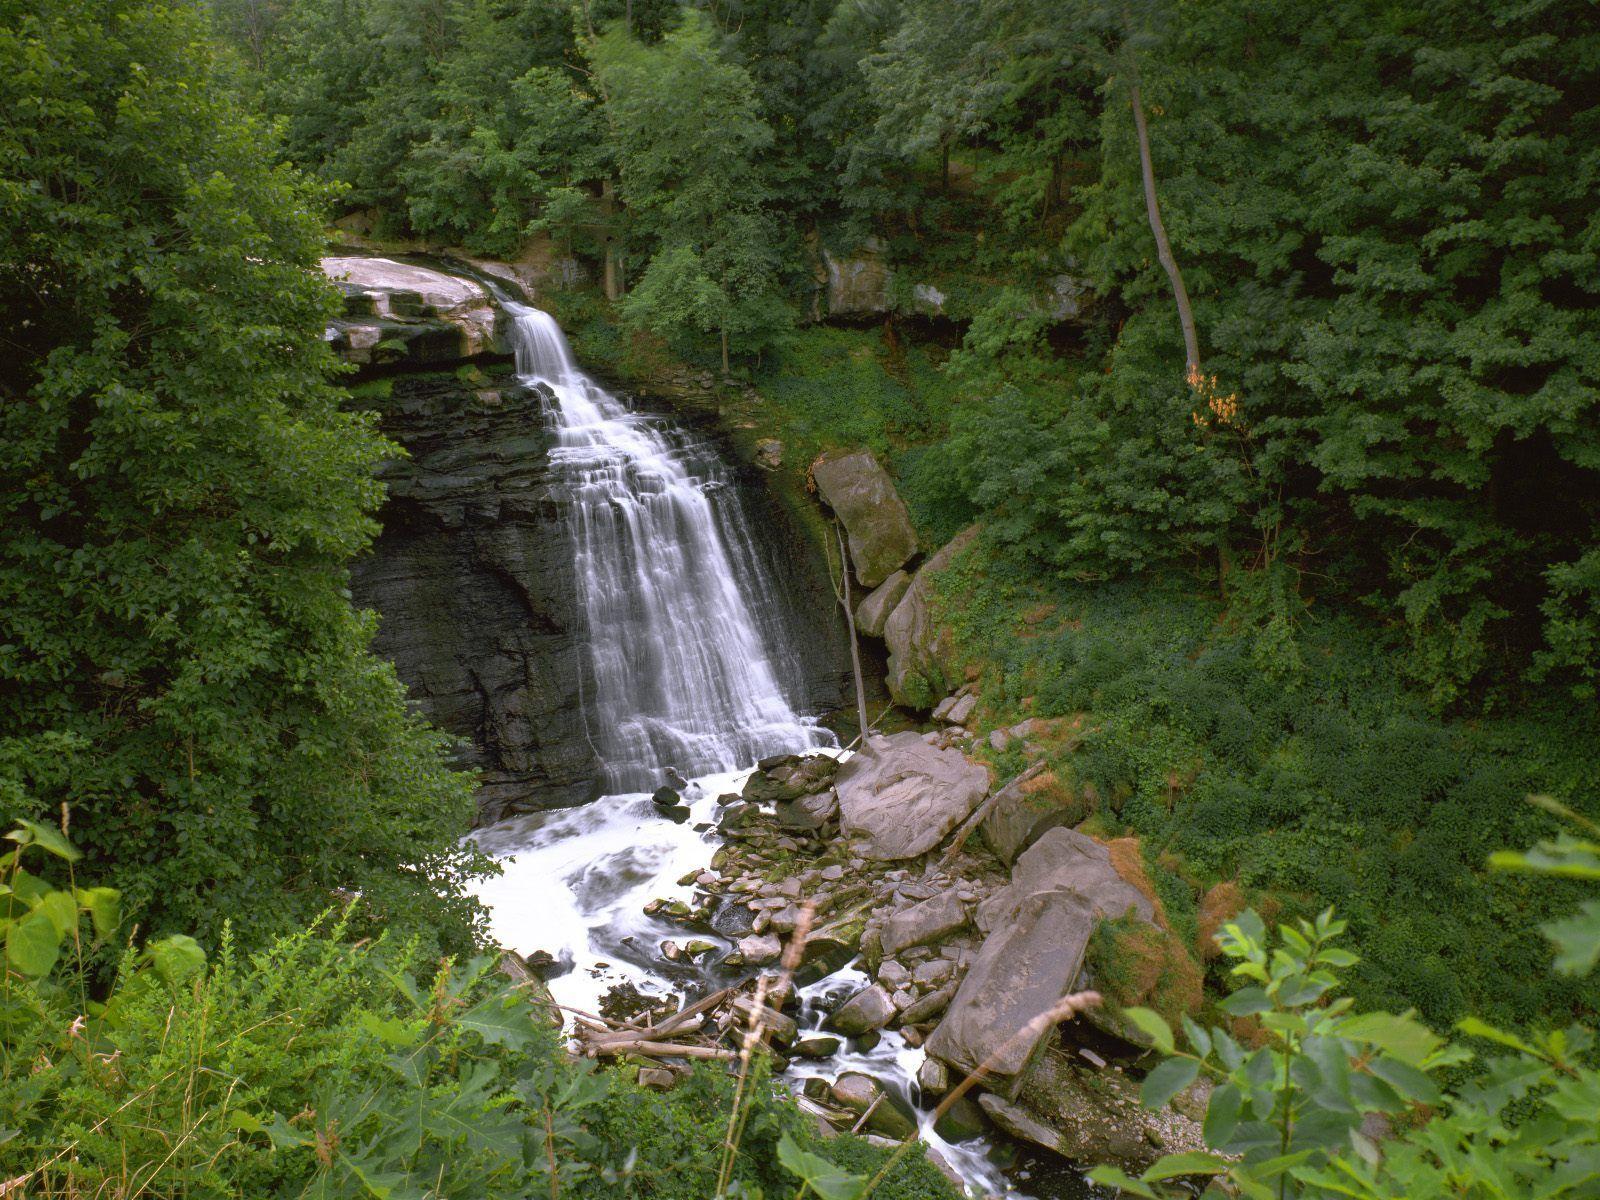 Brandywine Falls, Cuyahoga Falls, Ohio (my hometown). Locations